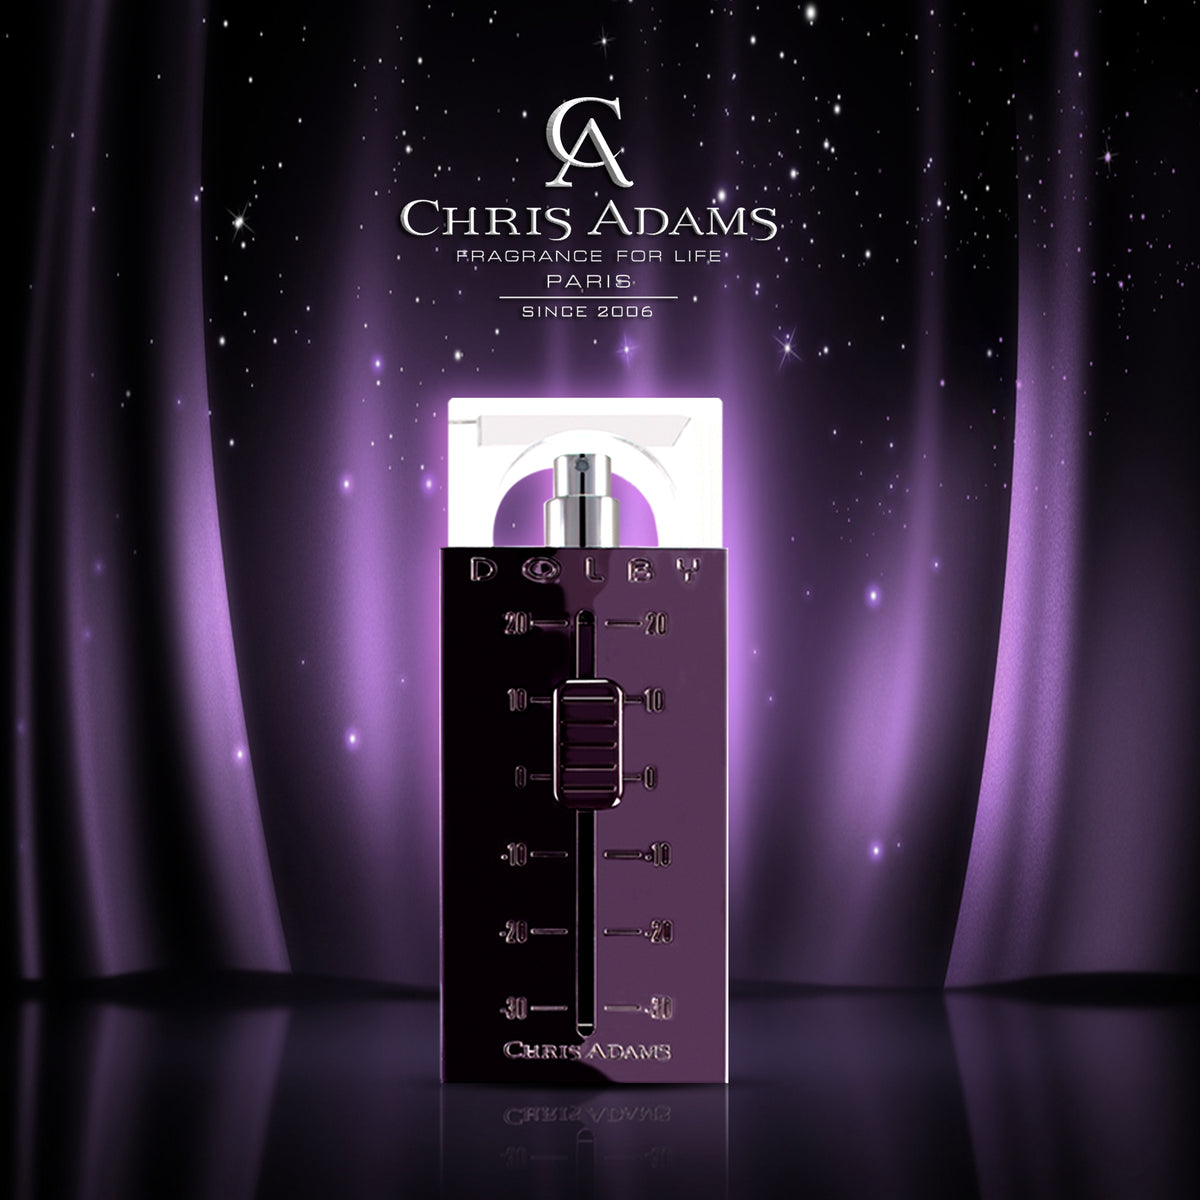 Chris Adams Eau De Parfum - Dolby, 100ml Gardenia Cosmotrade LLP